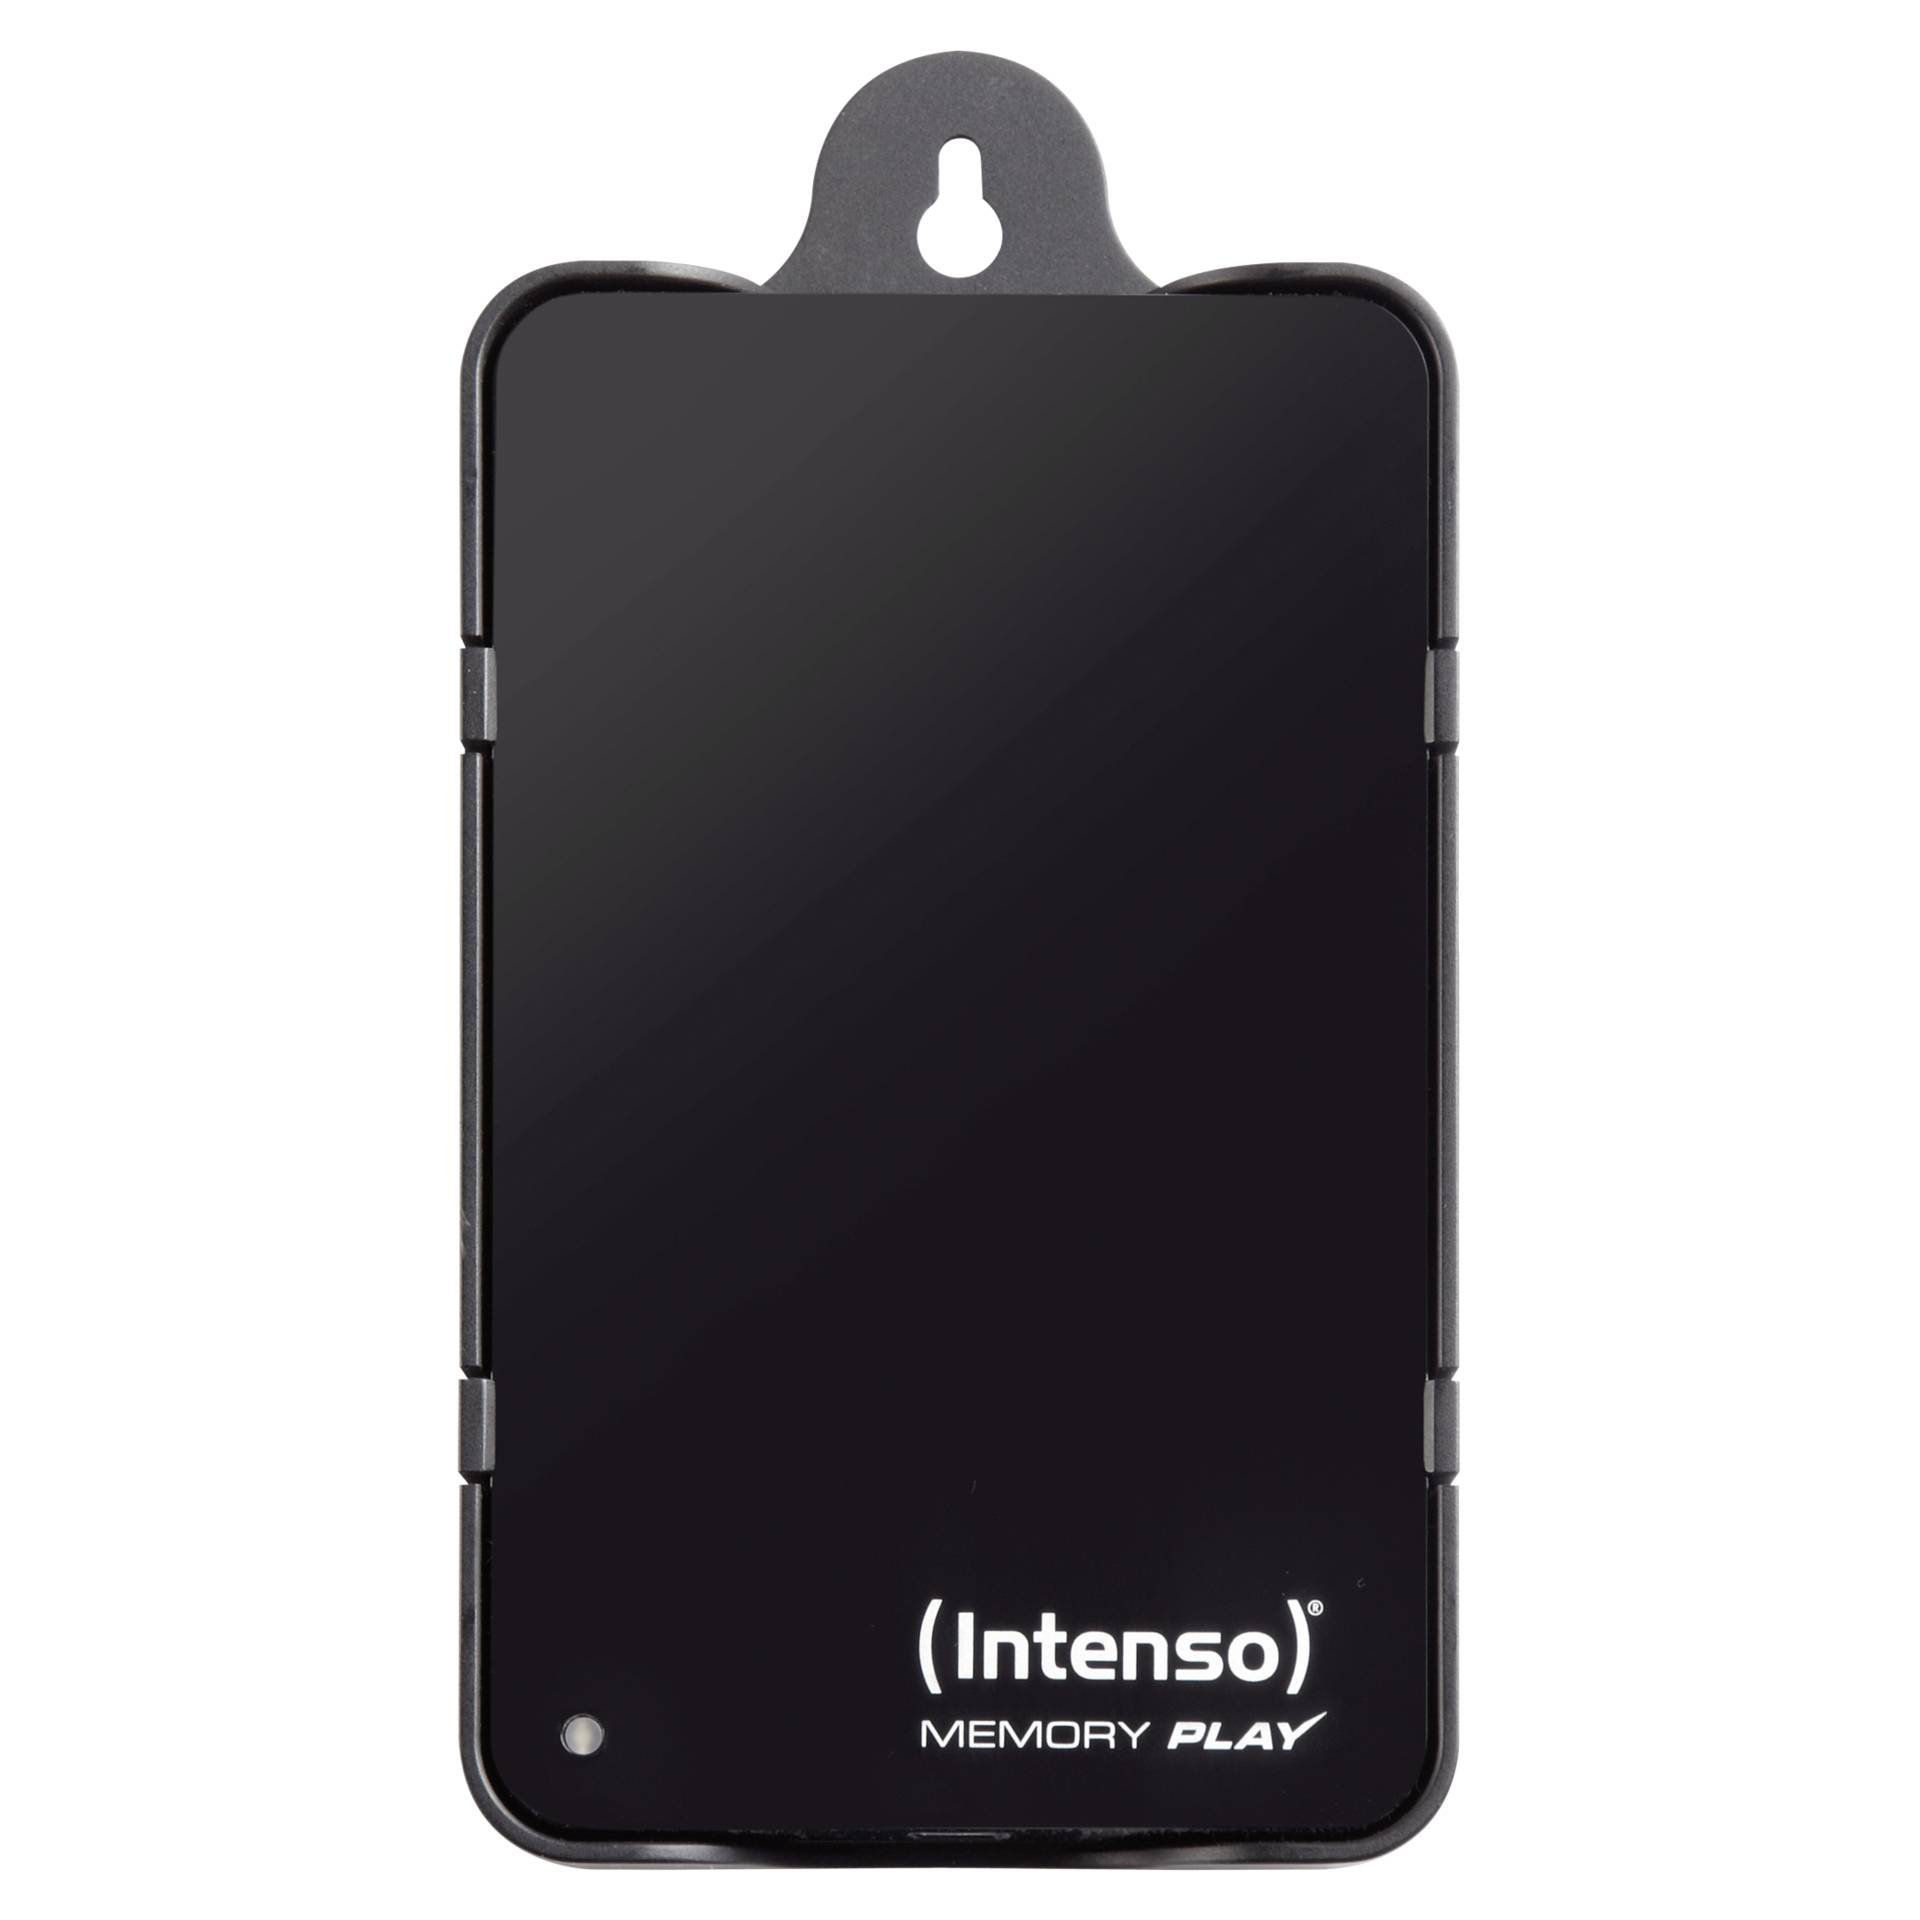 1.0 TB HDD Intenso Memory Play schwarz 2.5 Zoll / 6.4cm USB 3.0